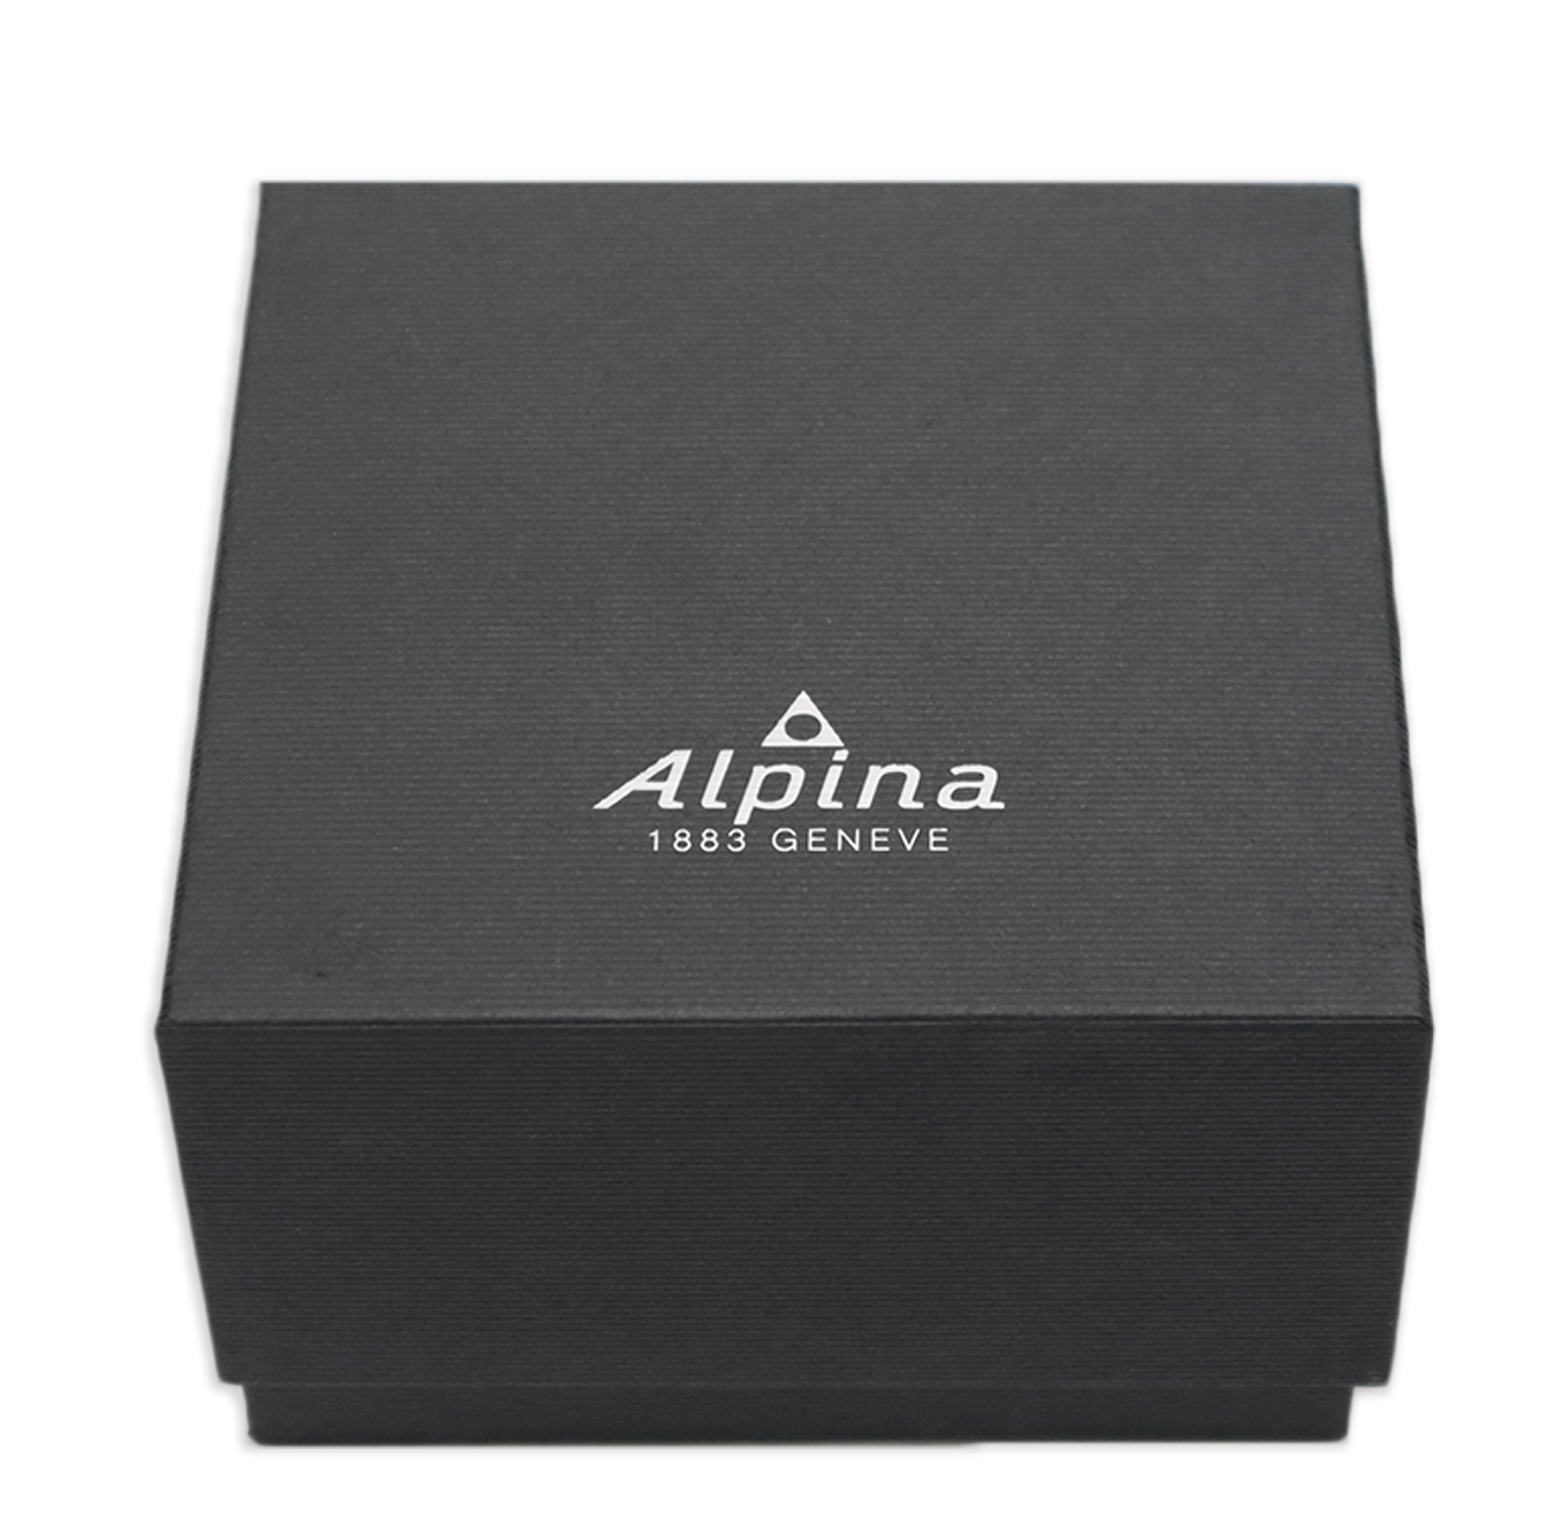 Alpina Alpiner Regulator Automatic Swiss Watch Dark Blue Guilloché Dial Brown Leather Strap AL-650NNS5E6